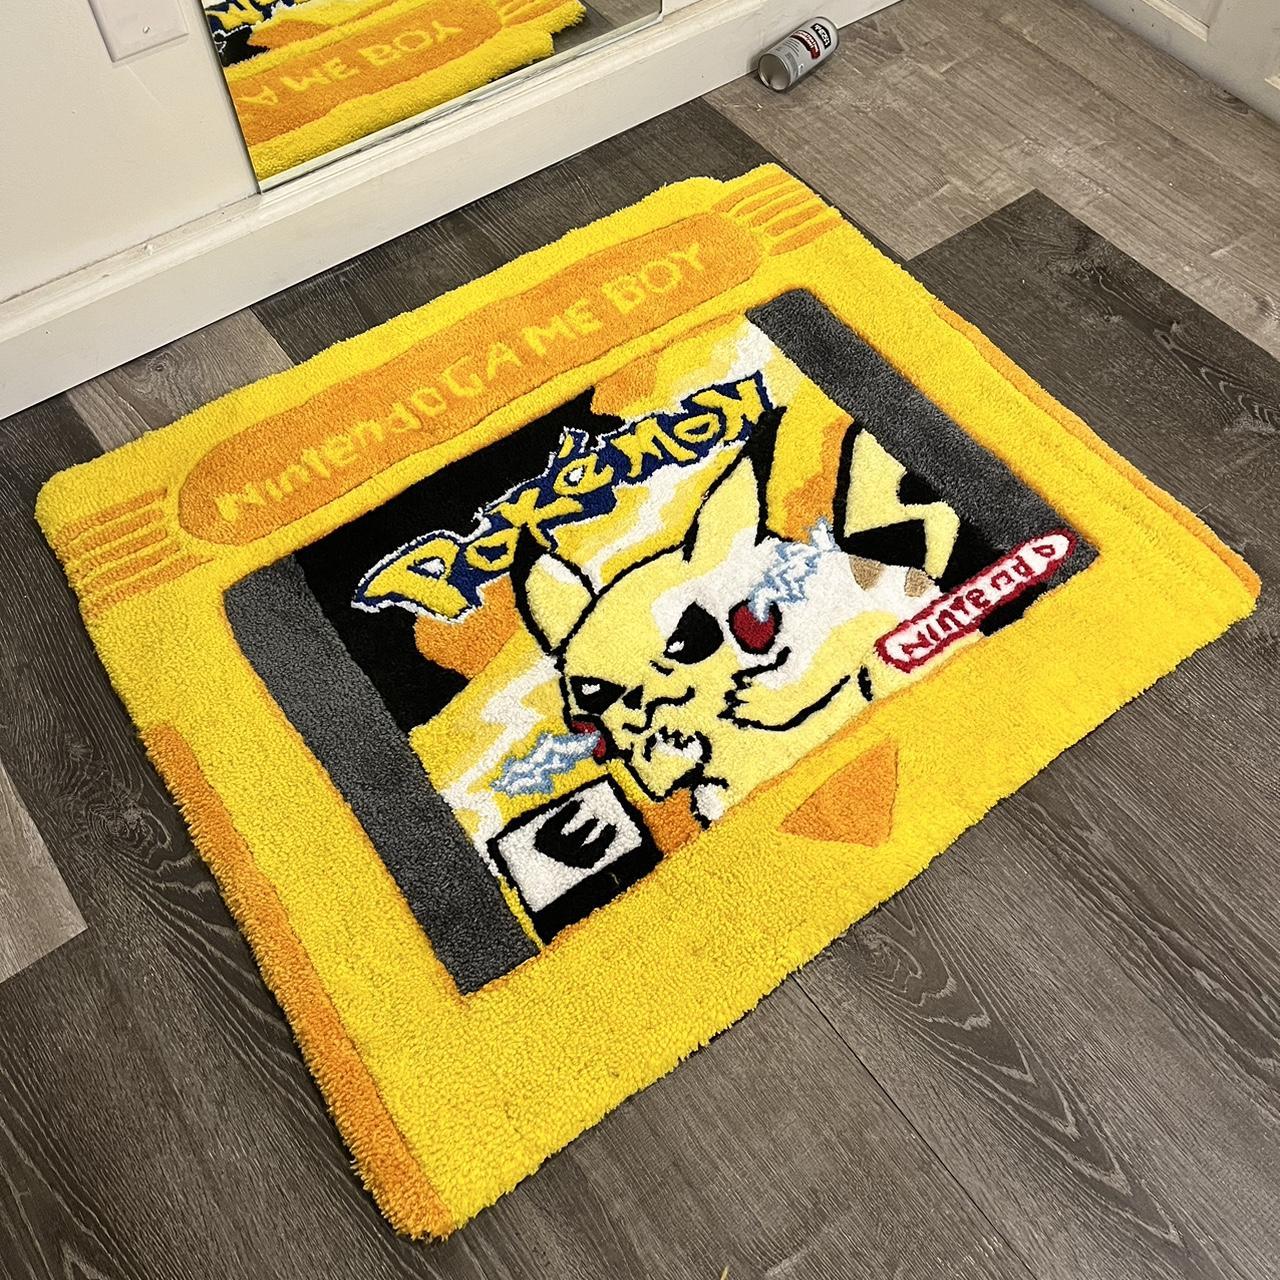 Random: Custom-Made Pokémon Yellow Game Boy Rug Looks Comfy As Heck